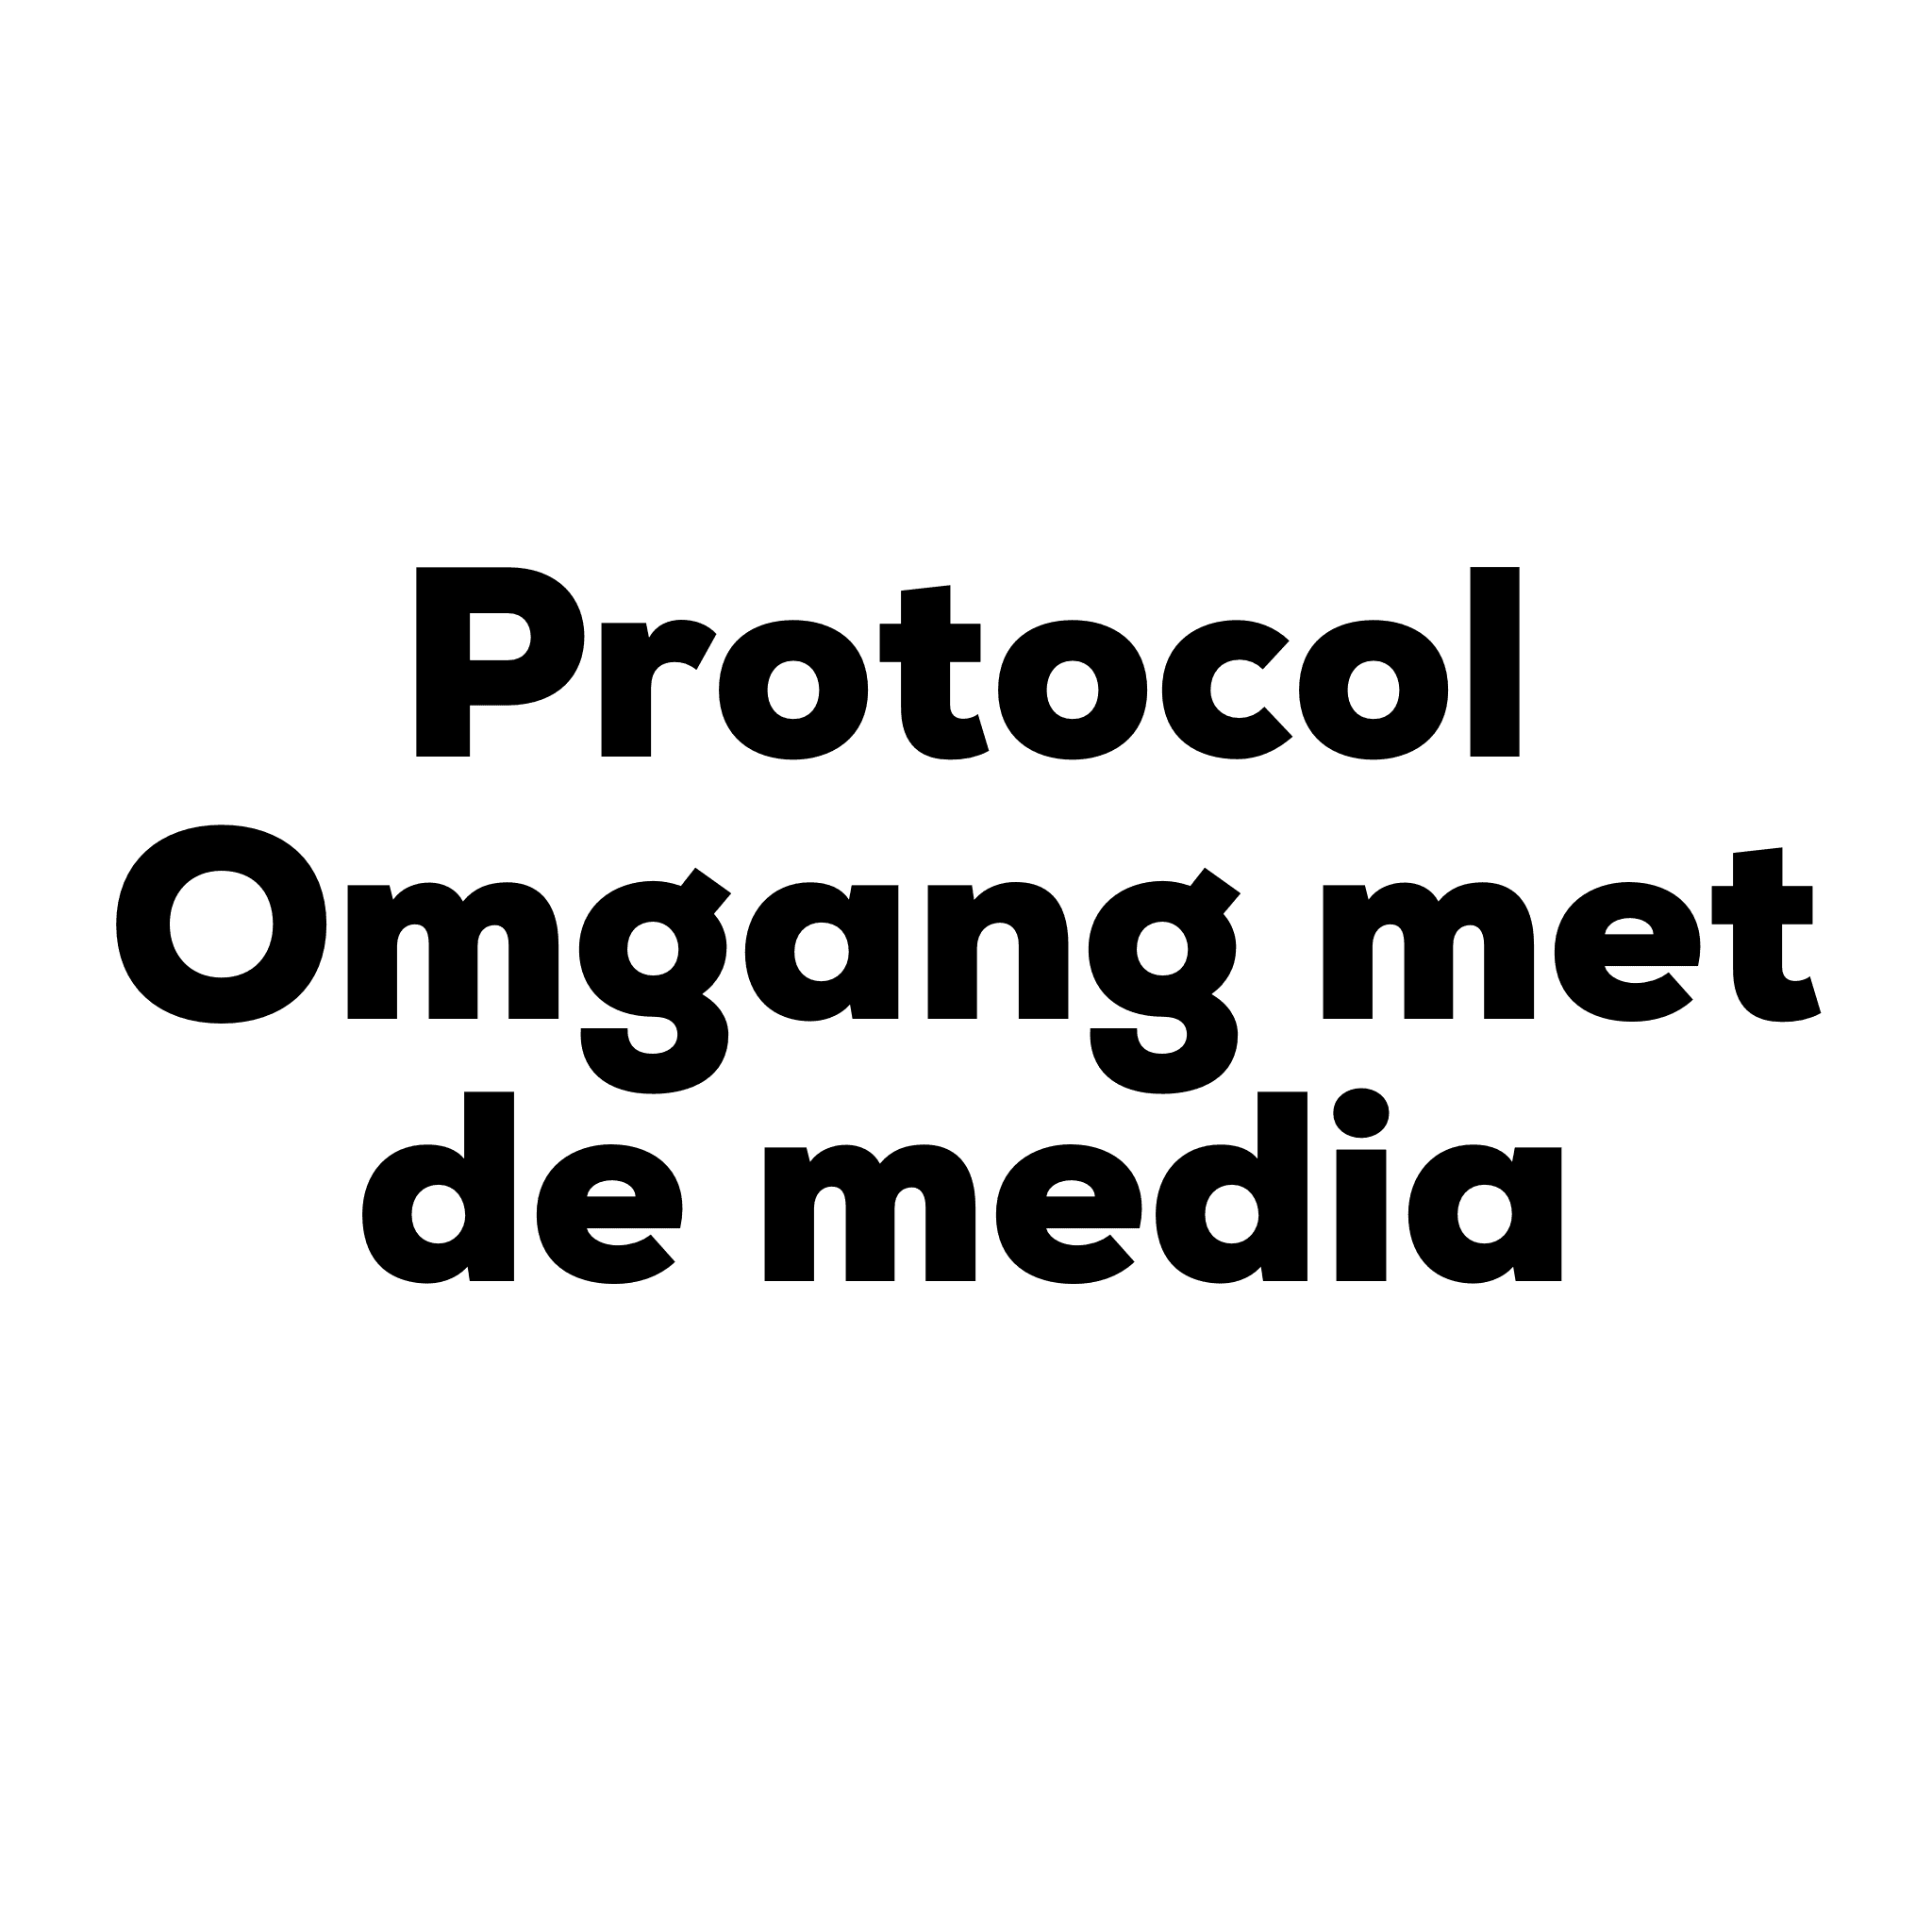 Protocol Omgang met de media